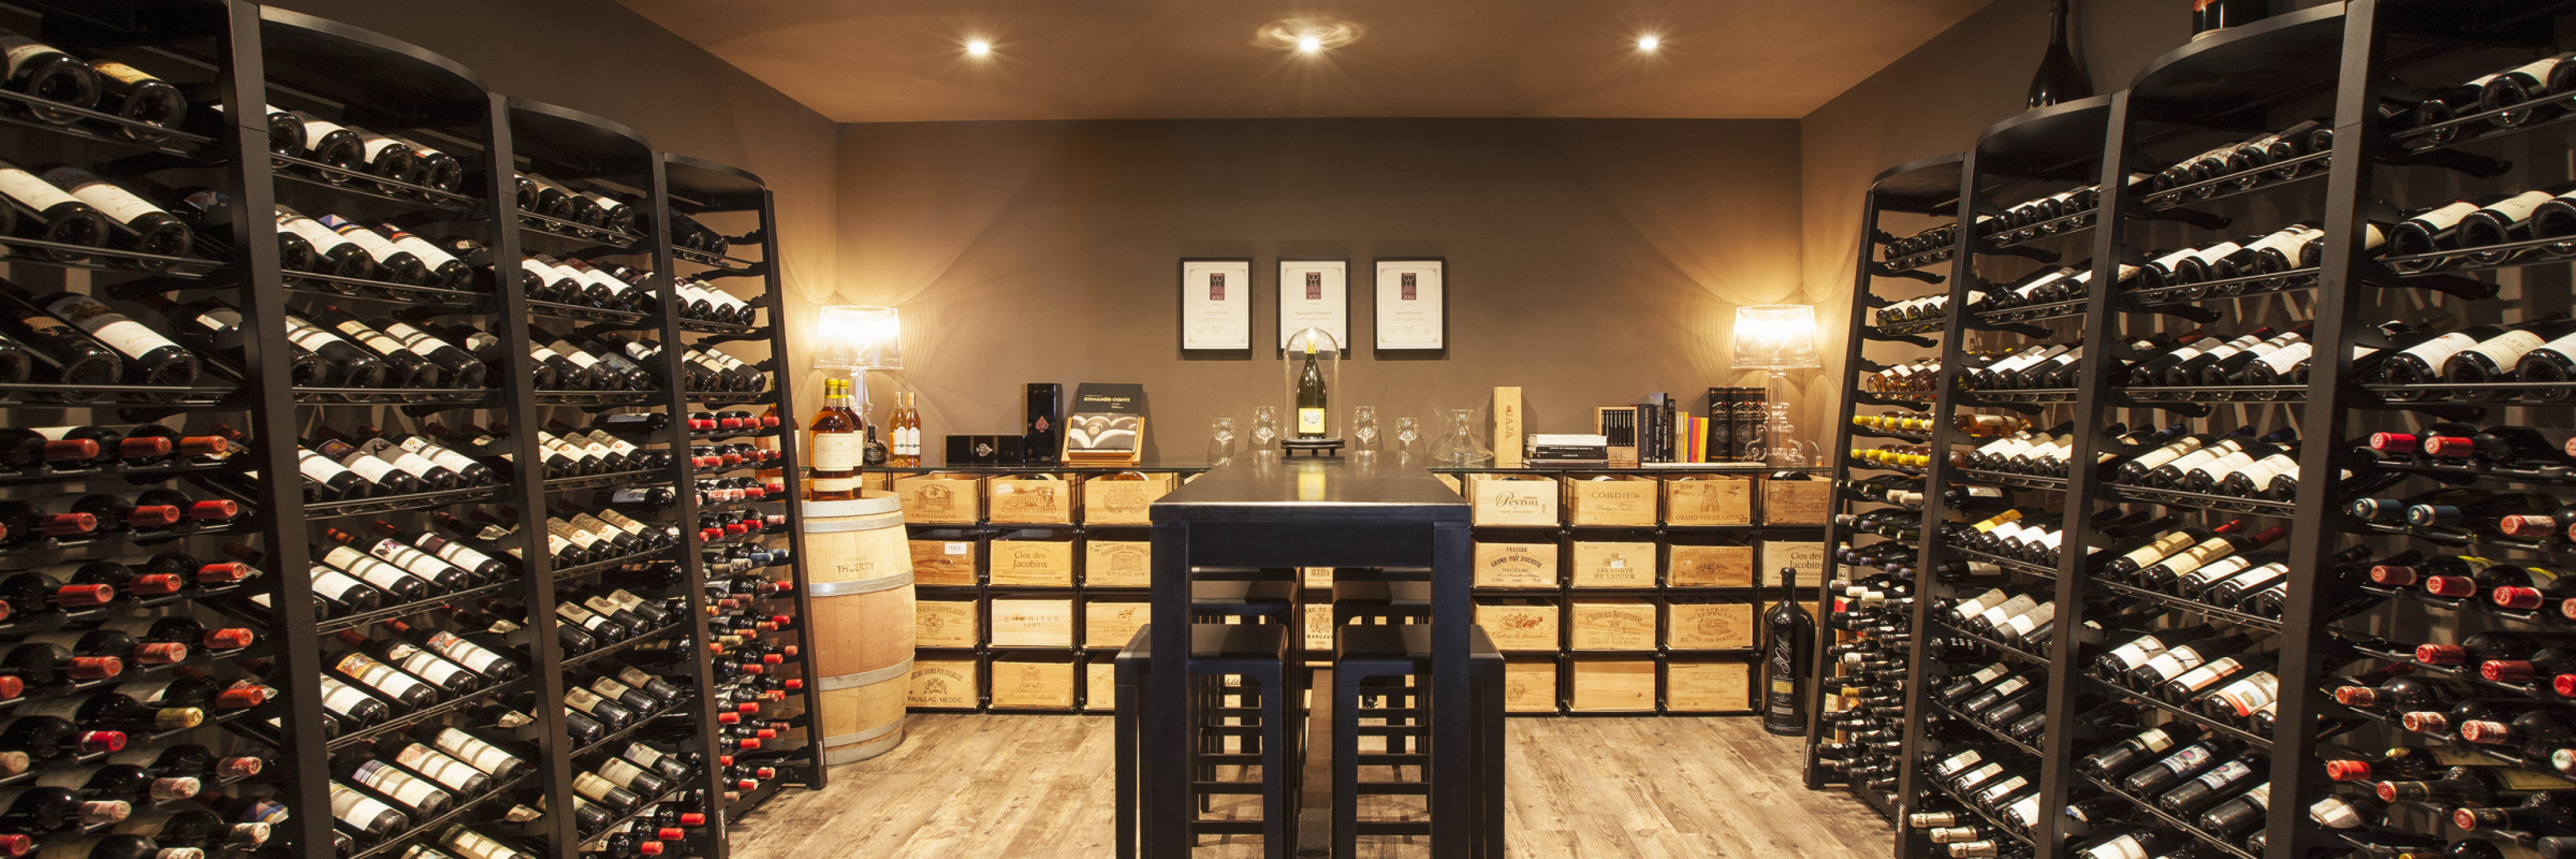  Wine rack, wine shelf, wine case, modular units? Which wine storage solutions to choose?